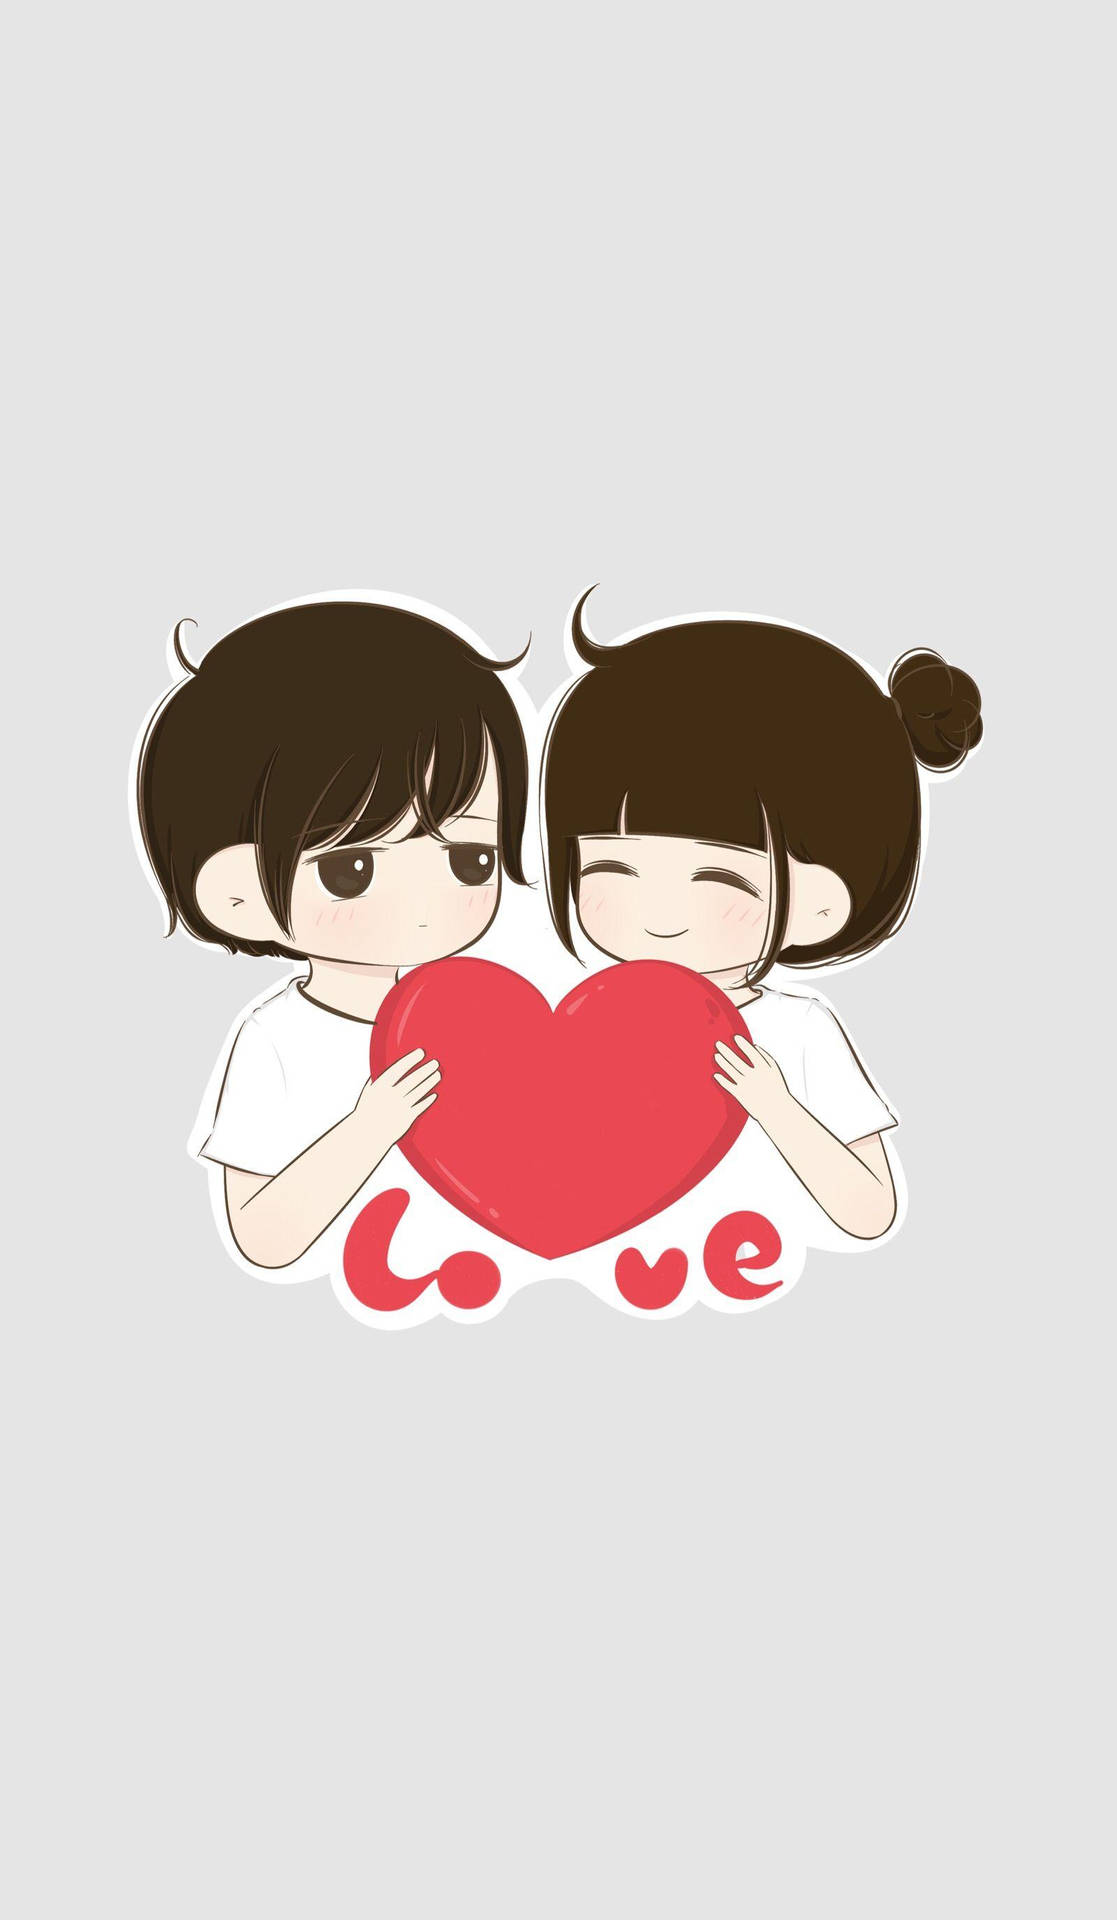 Cute Cartoon Couple Holding Heart Background